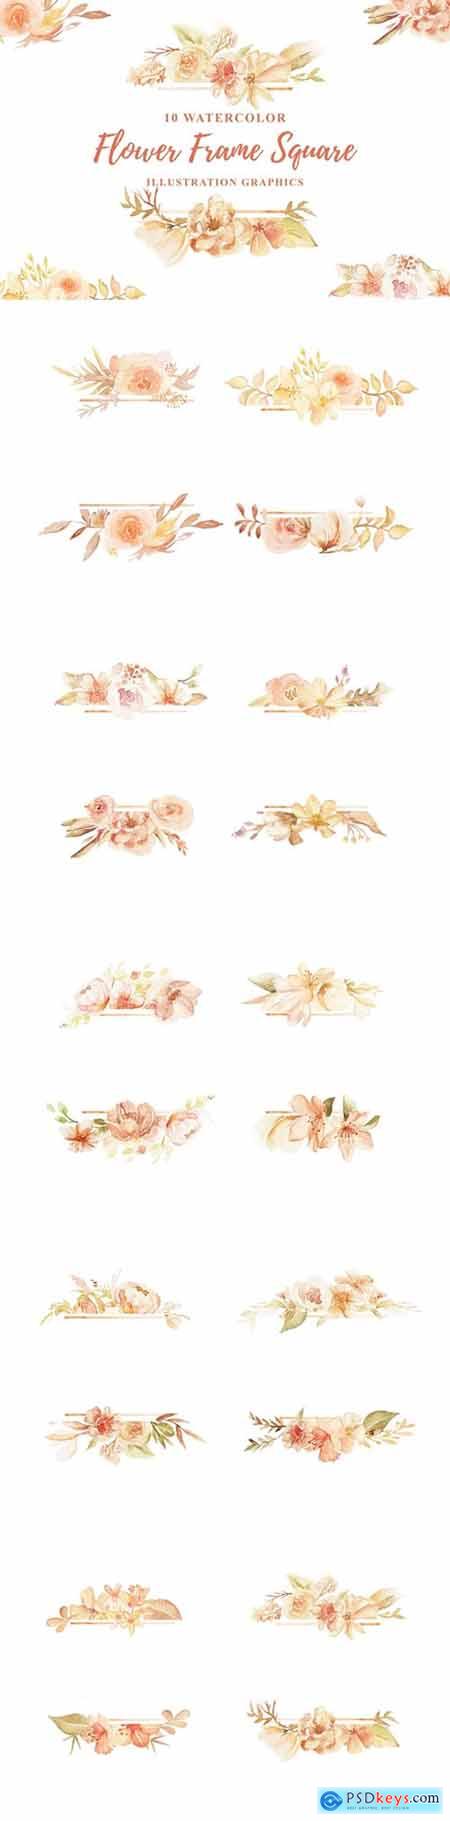 10 Watercolor Flower Frame Square Illustration